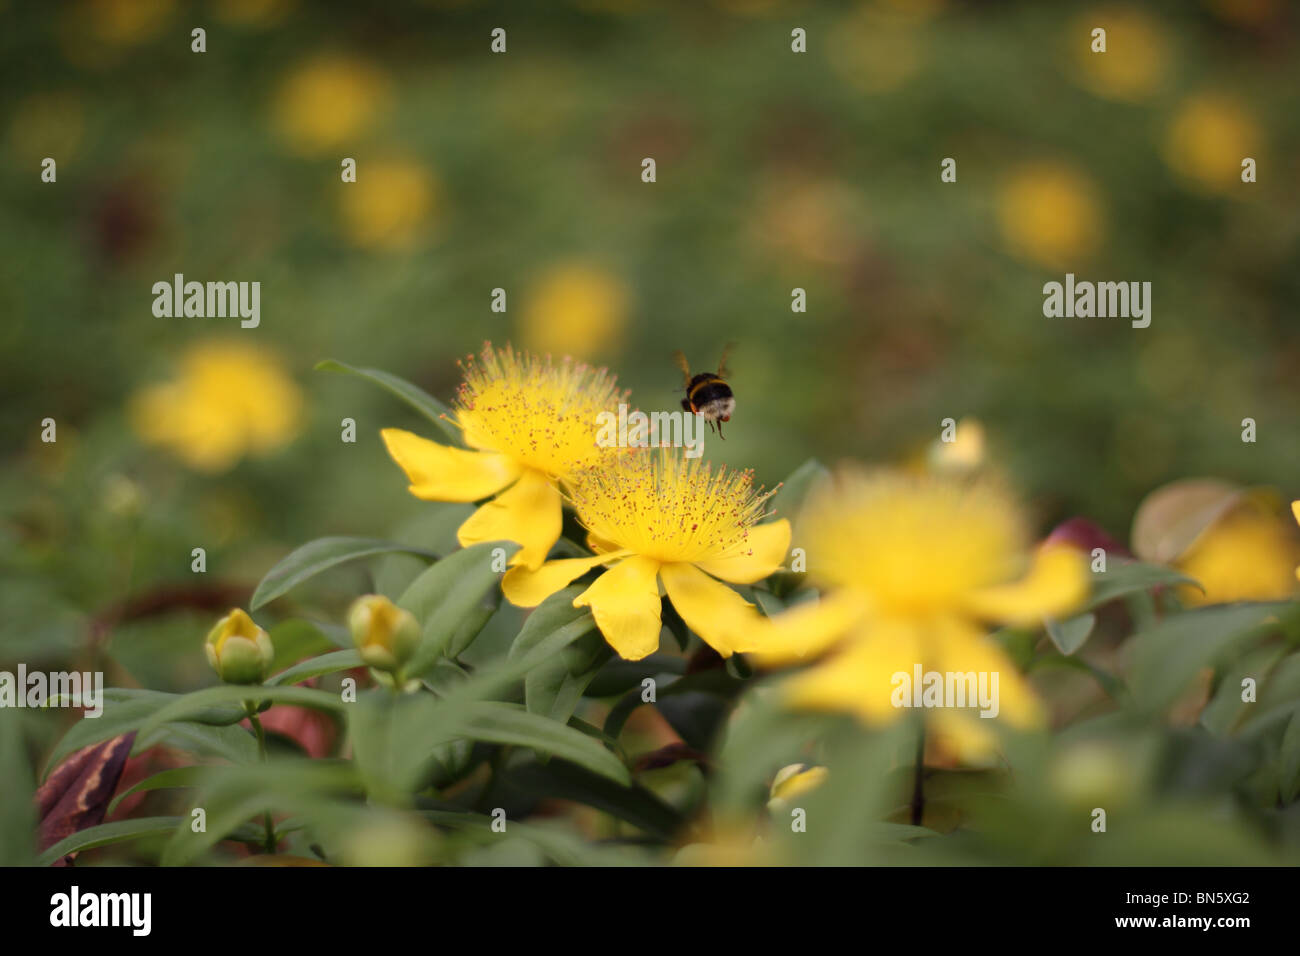 Bumble bee visiting the yellow flowers of Rose of Sharon / Aaron's beard / St John's Wort Stock Photo